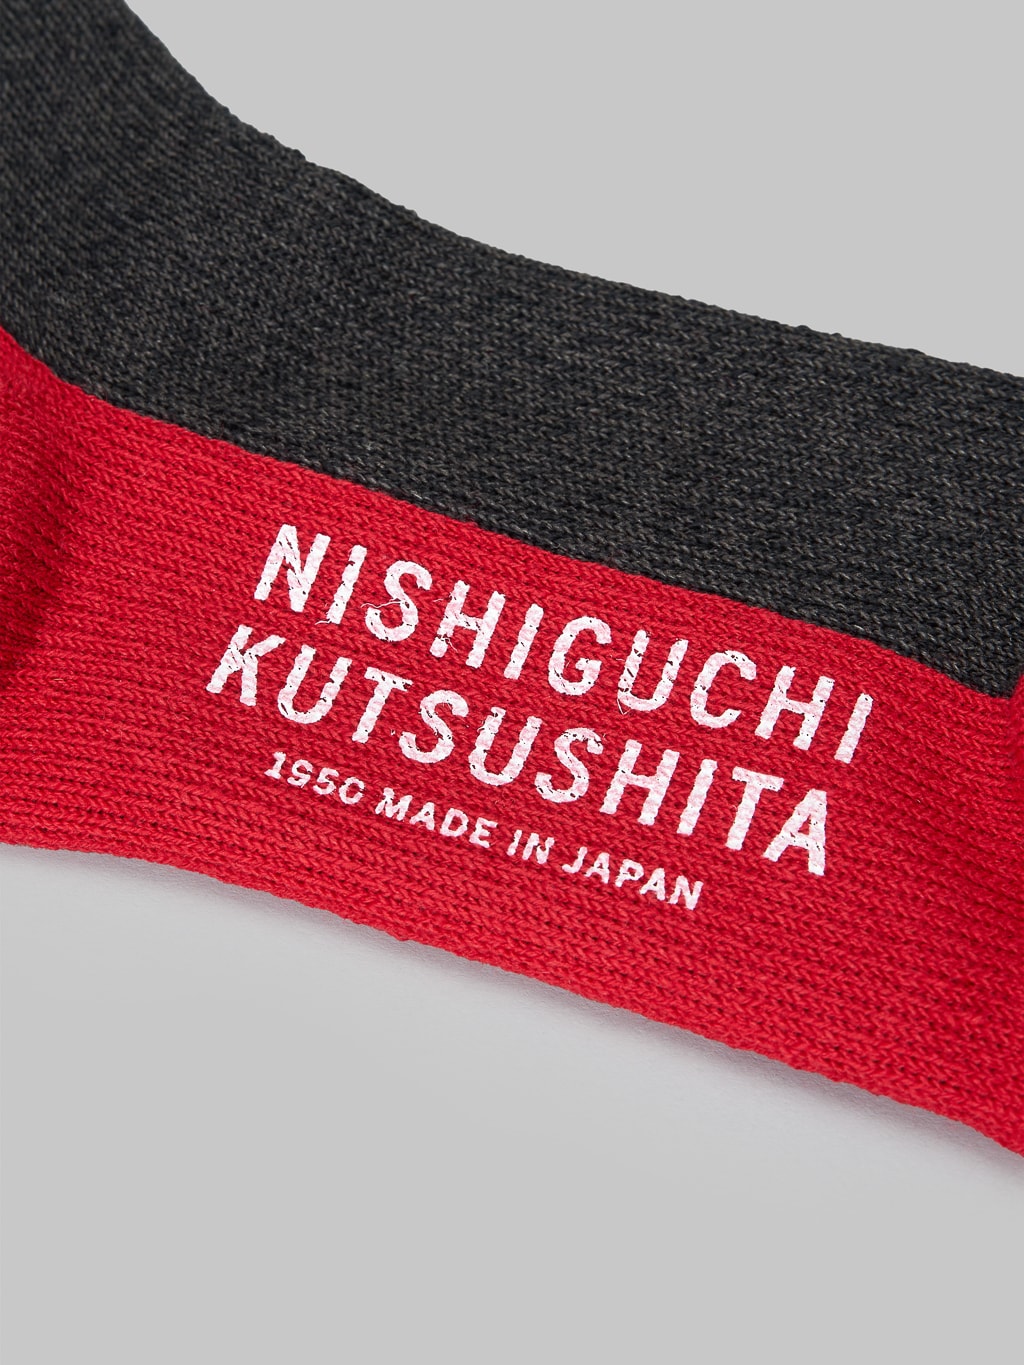 Nishiguchi Kutsushita Wool Pile Walk Socks Charcoal brand logo stamped